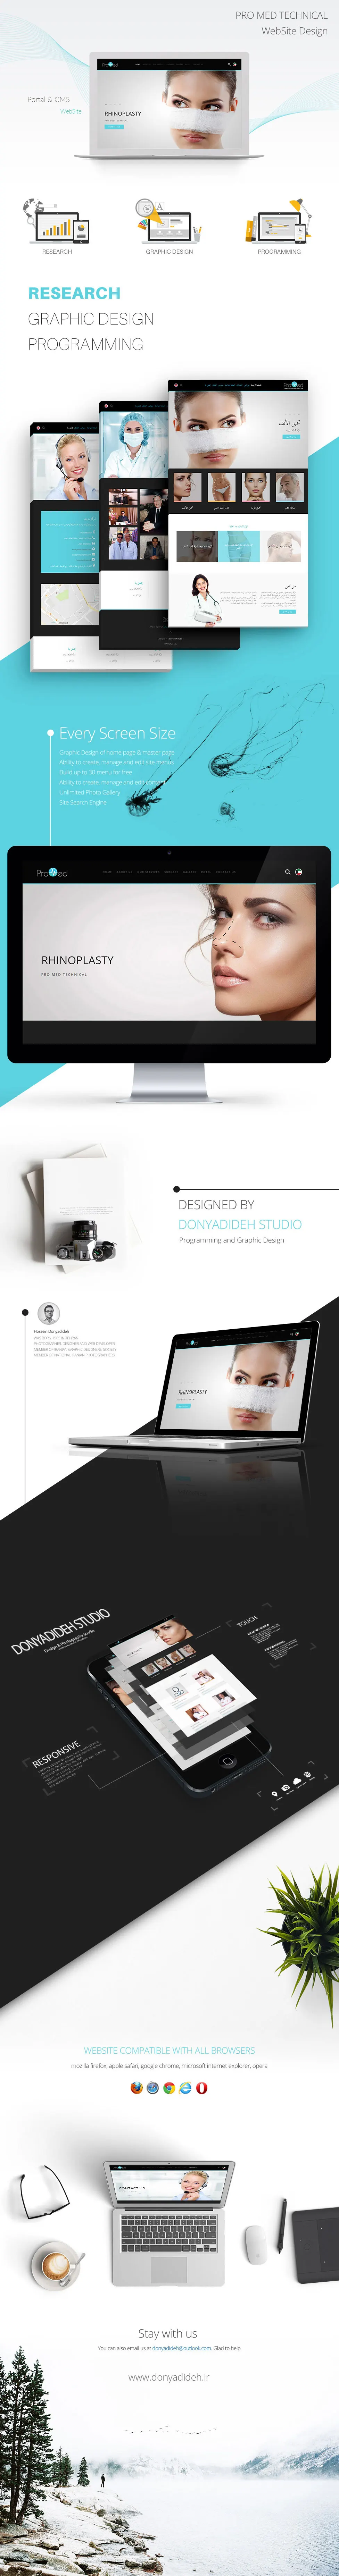 ProMed Company website development | Hossein Donyadideh